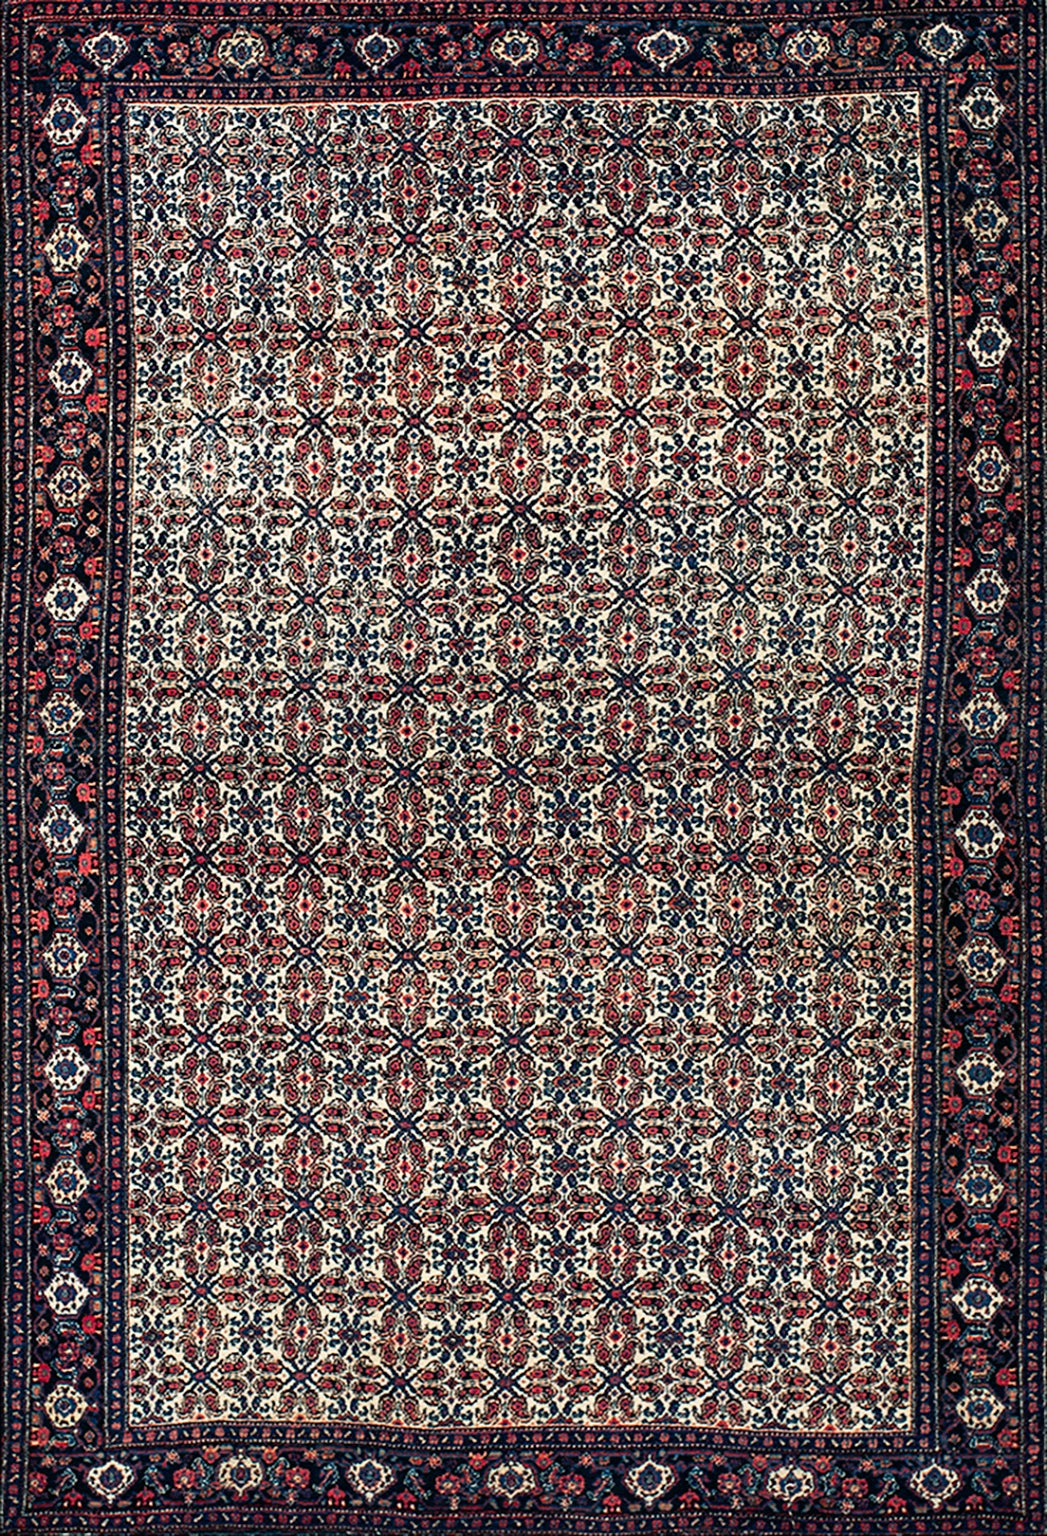 19th Century W. Persian Senneh Carpet on Silk Warp ( 4'4'' x 6'8'' - 132 x 203 ) For Sale